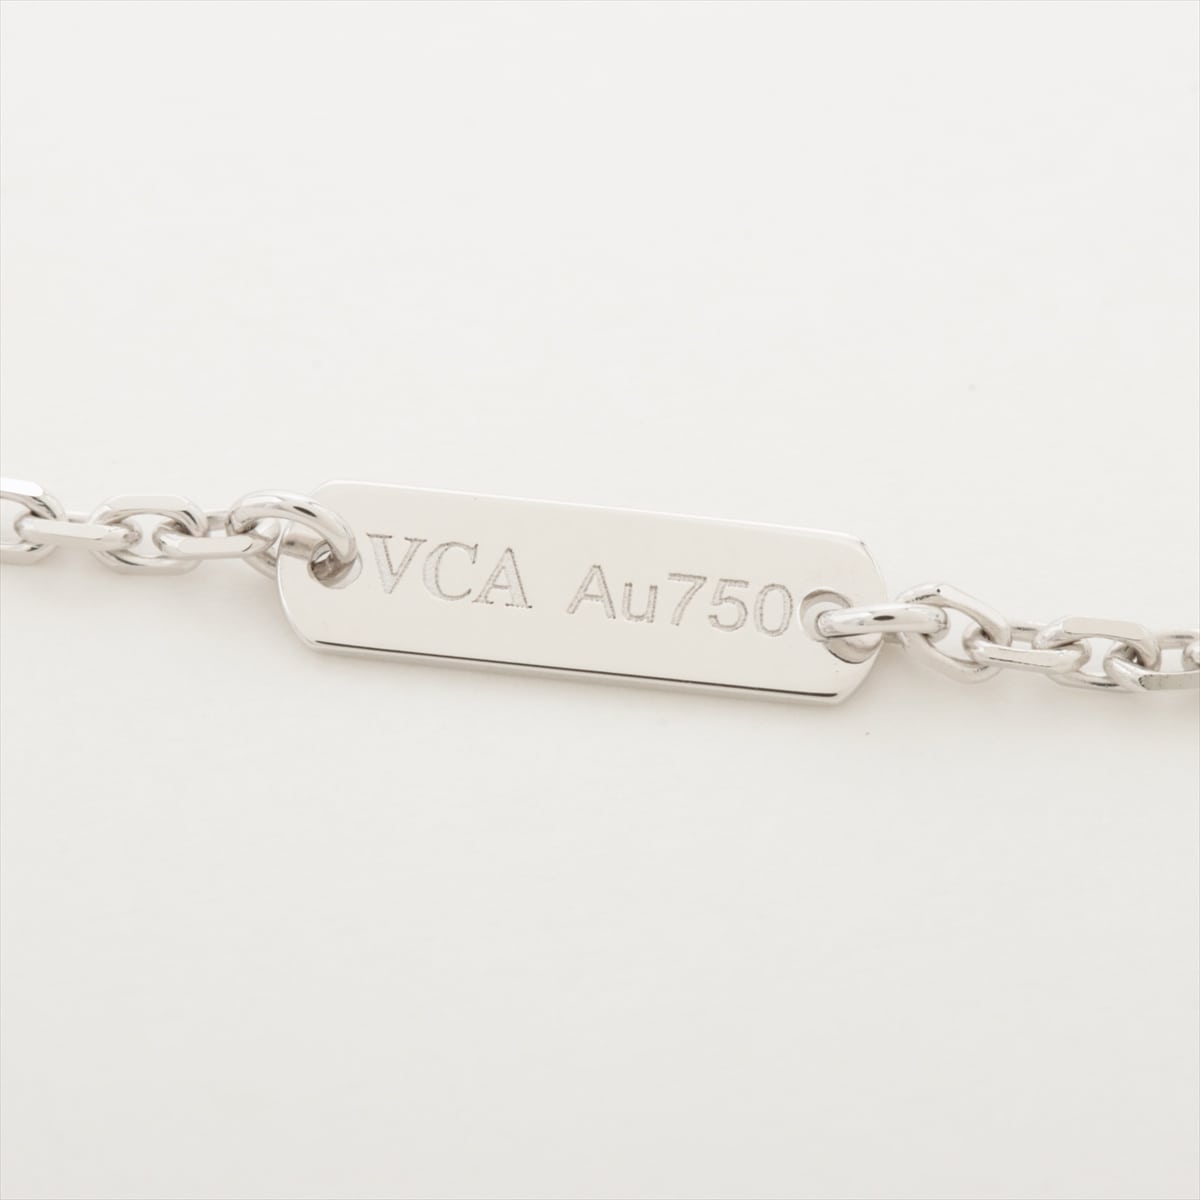 Van Cleef & Arpels Vintage Alhambra  Diamond Necklace 750 (WG) 7.1g Salad Green